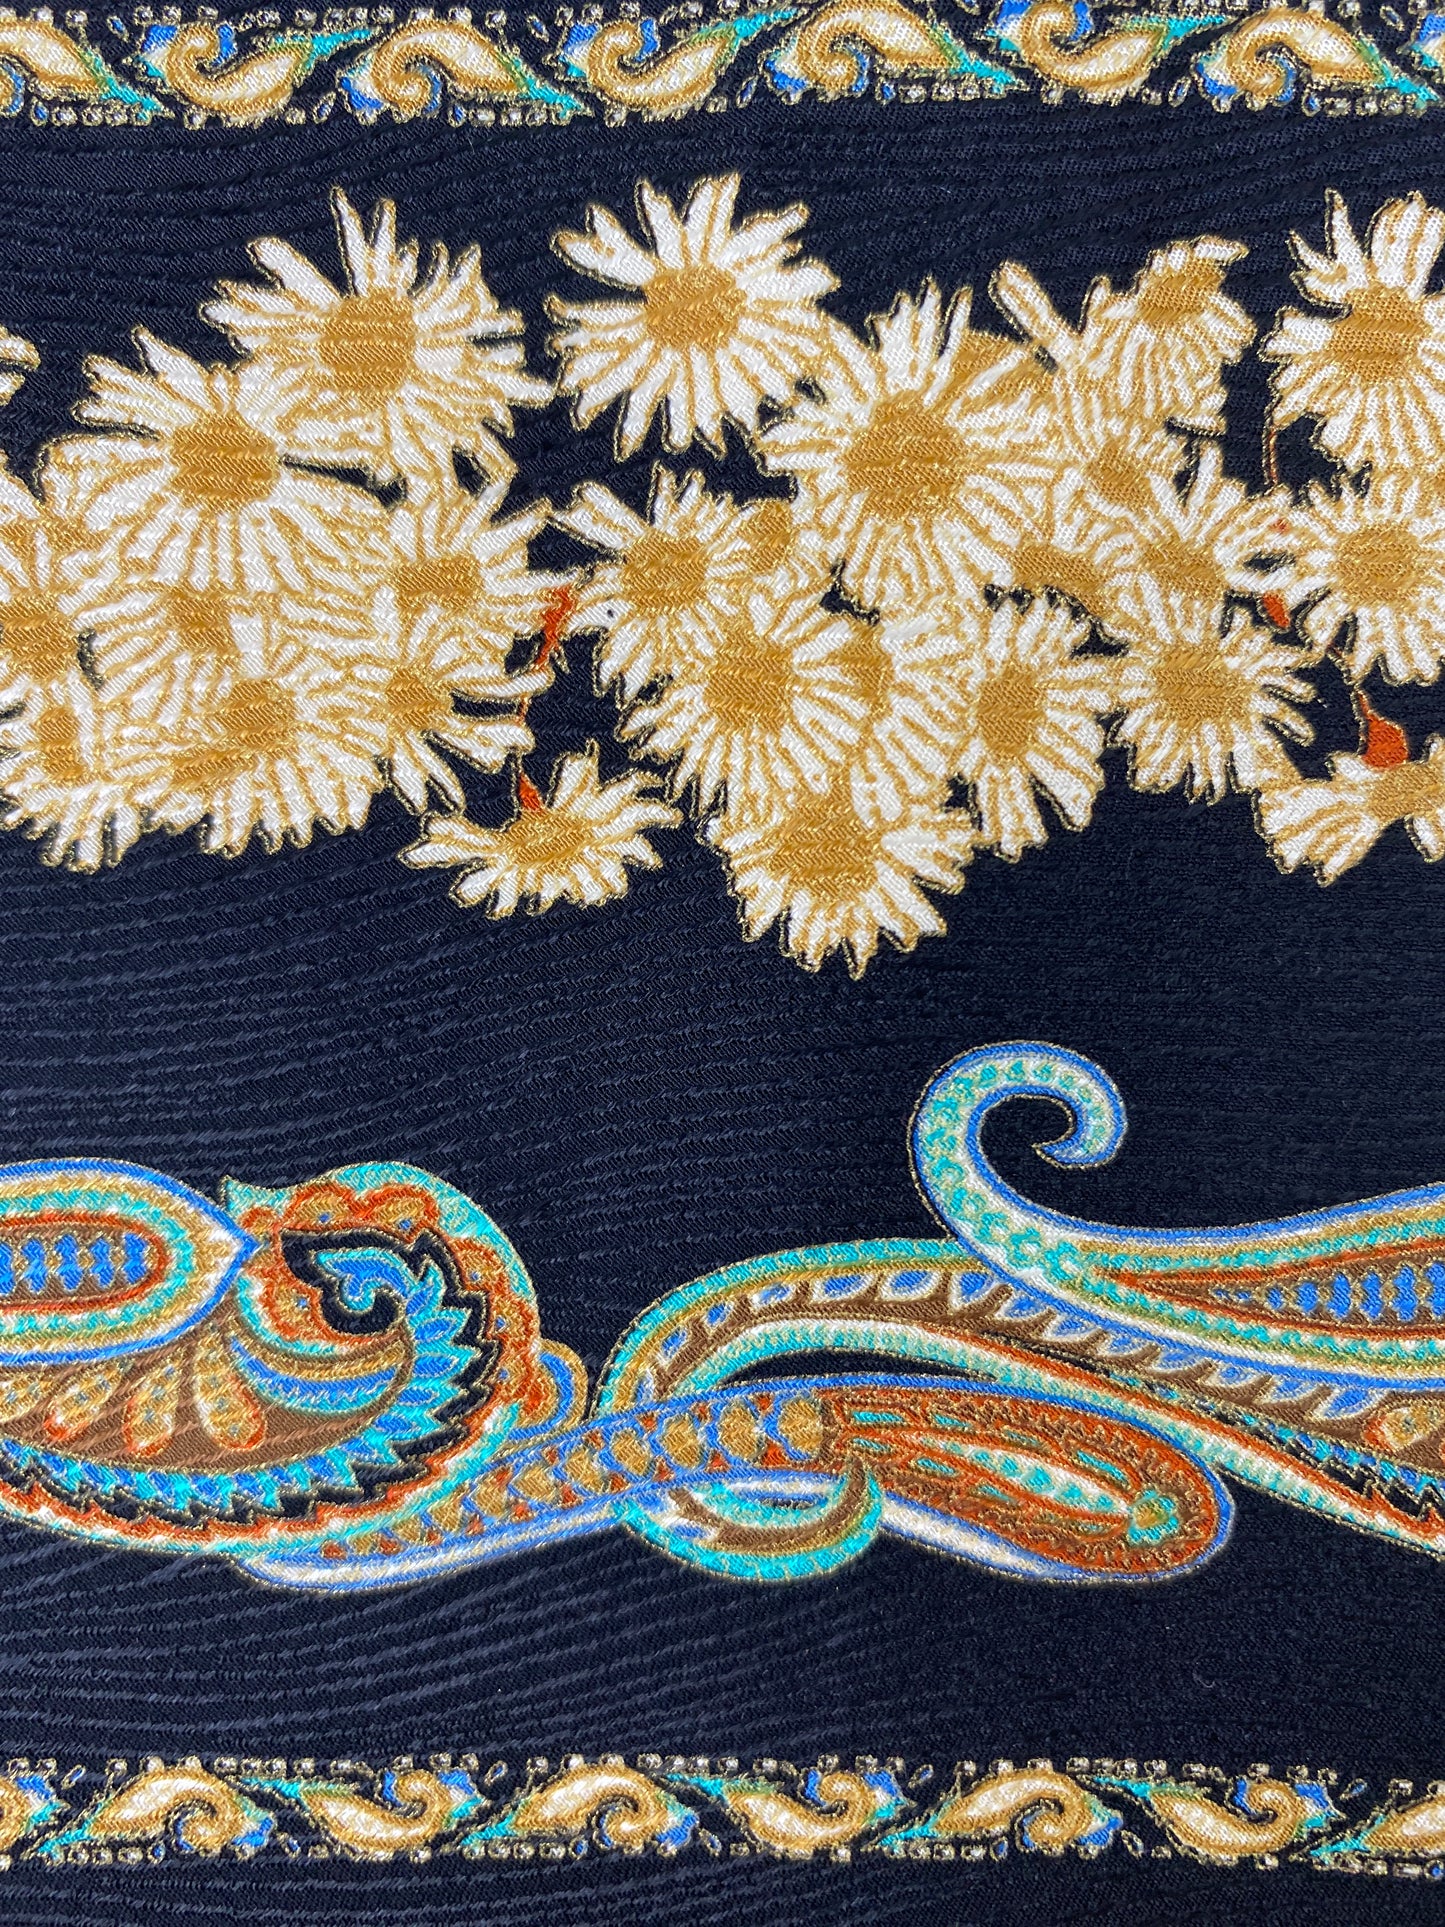 Close-up of: 90s Deadstock Silk Necktie, Men's Vintage Gold/Black Paisley Floral Pattern Tie, NOS